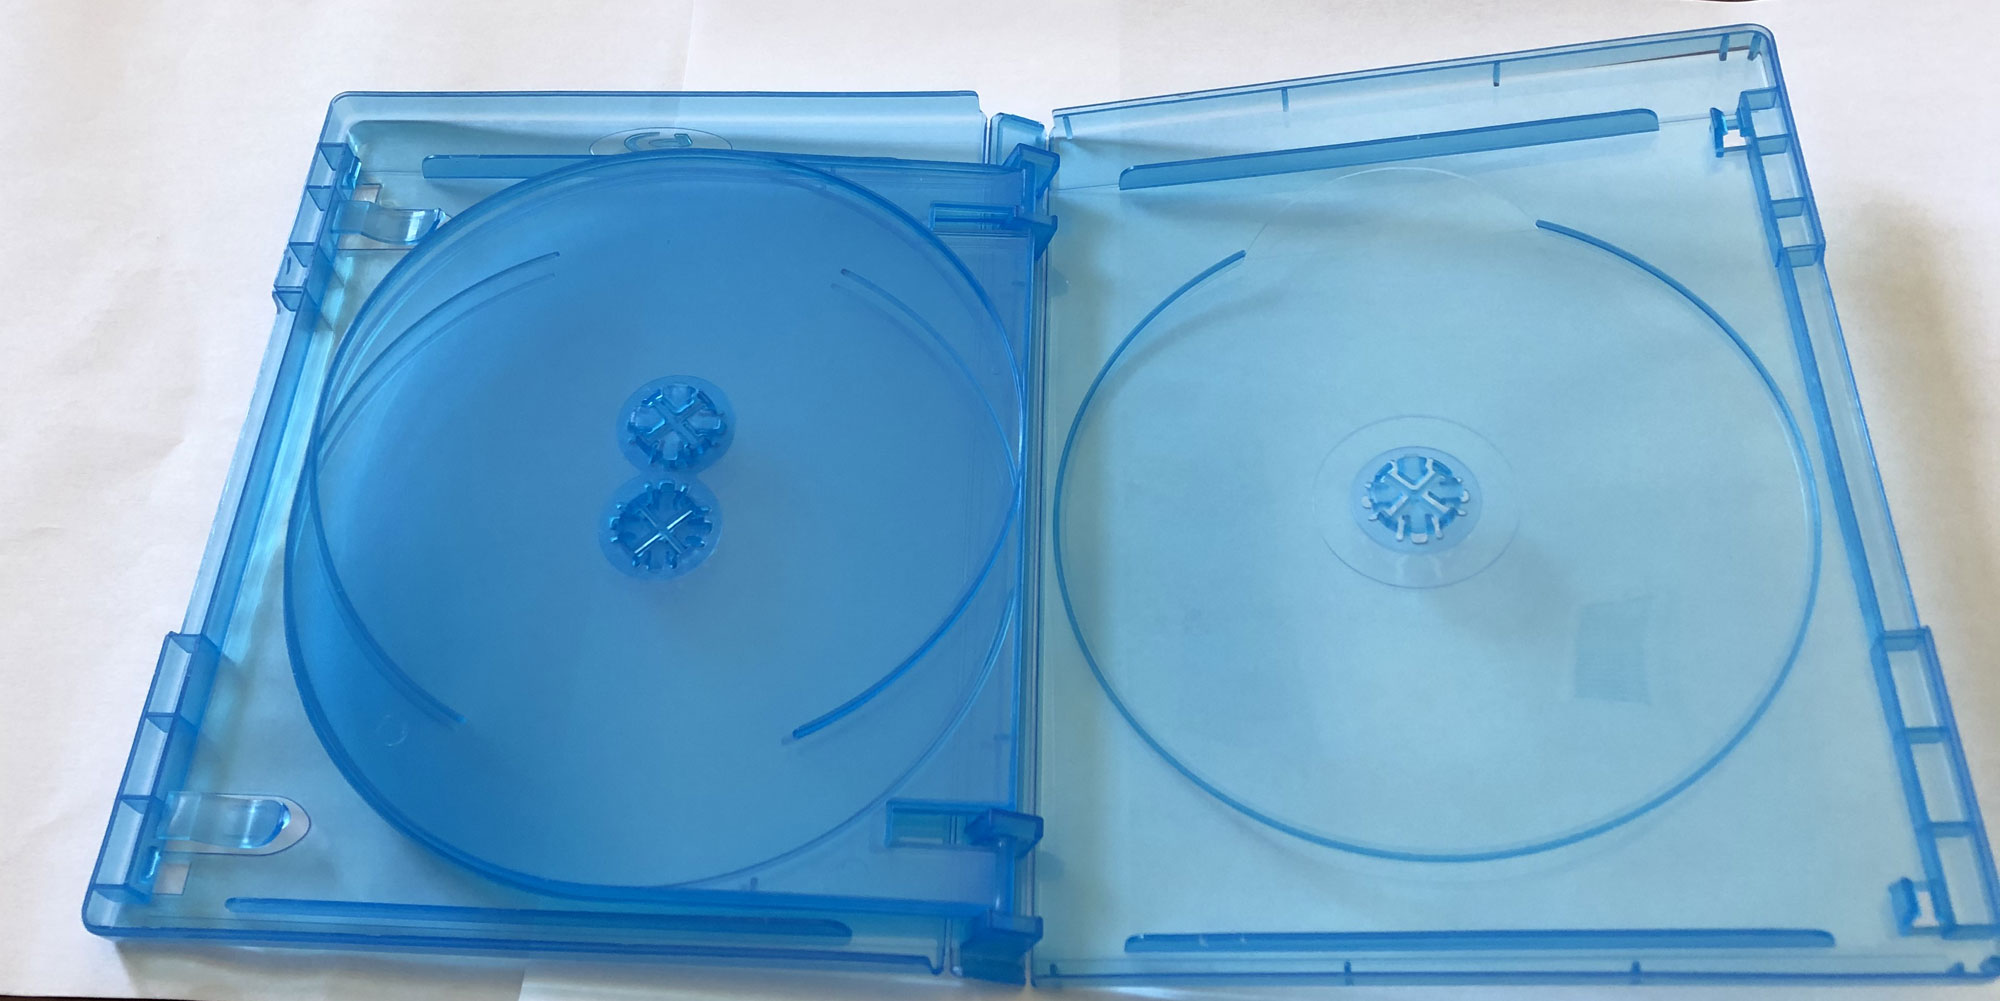 New 2 Pk MegaDisc Blu-Ray Multi 5 Discs case 15 mm Tray Storage Box High Quality Free Shipping